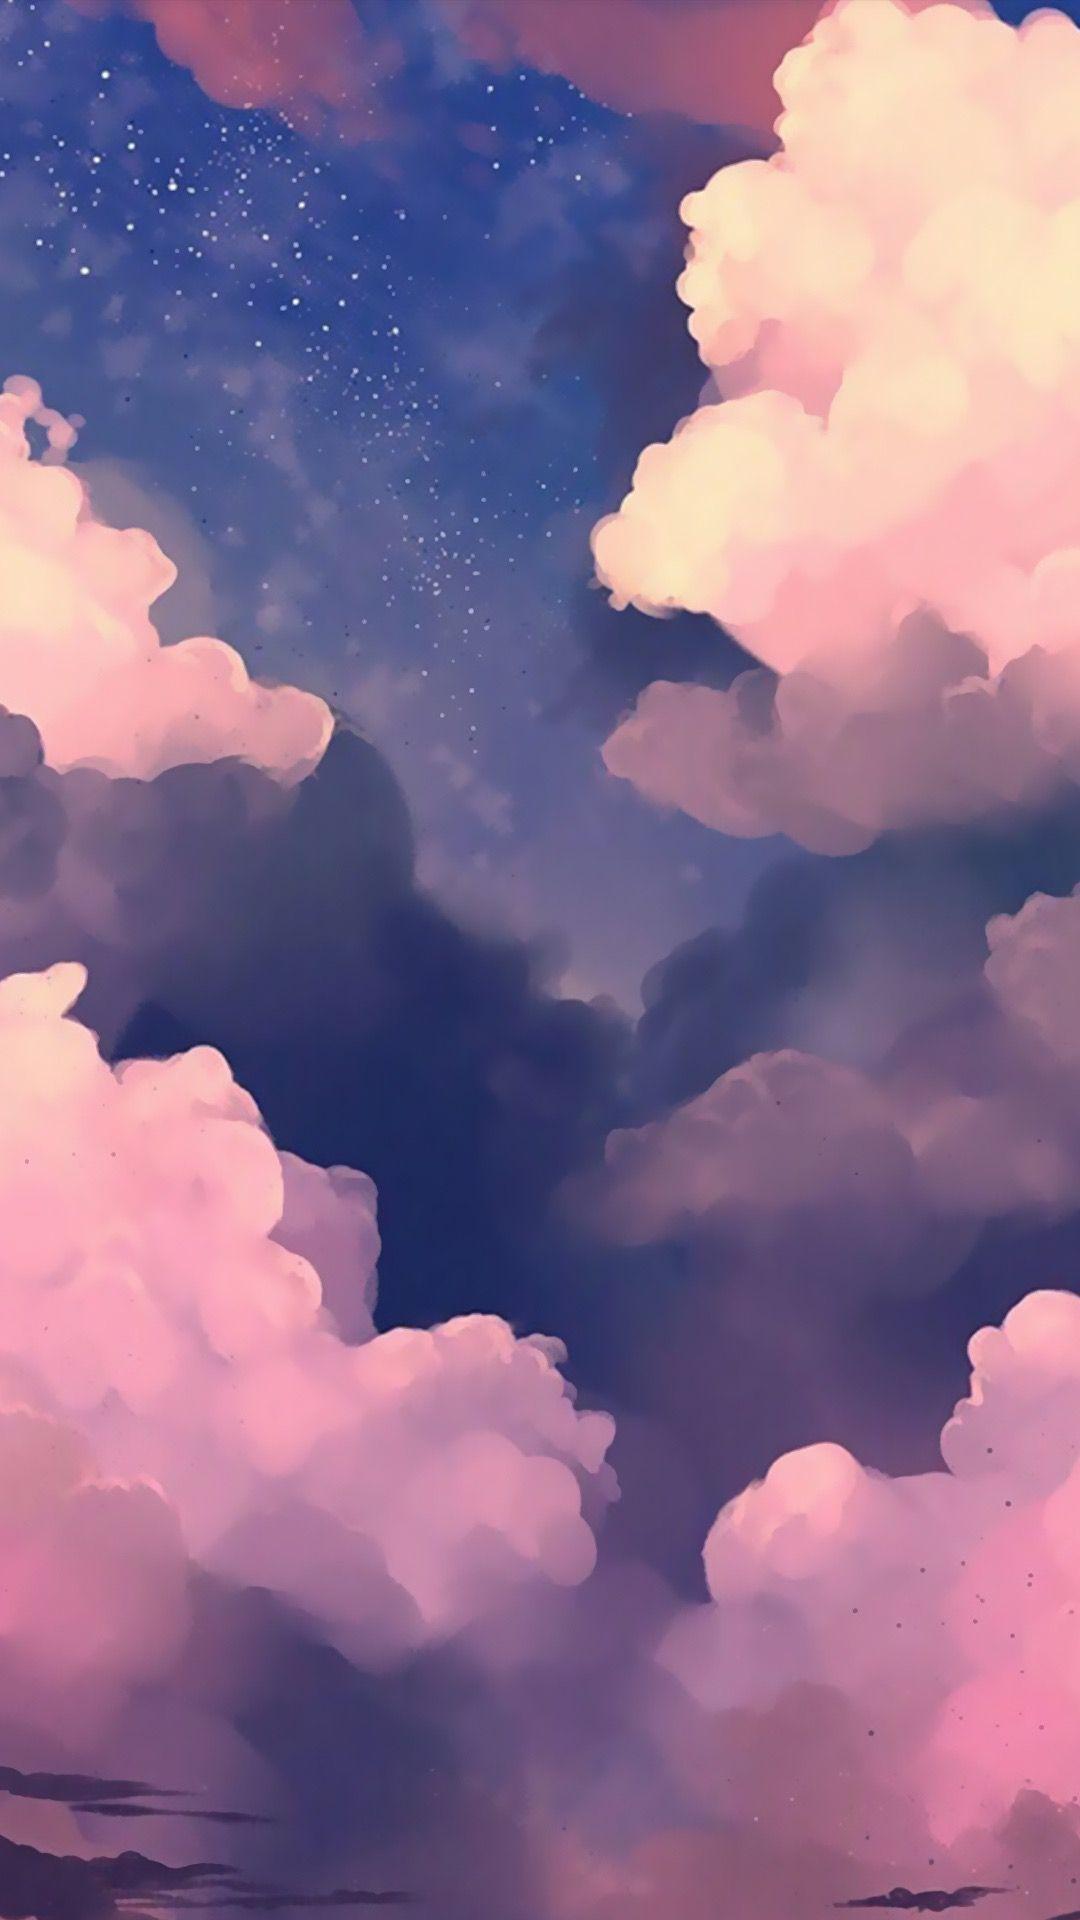 Cloudy Night Sky Wallpaper  Etsy